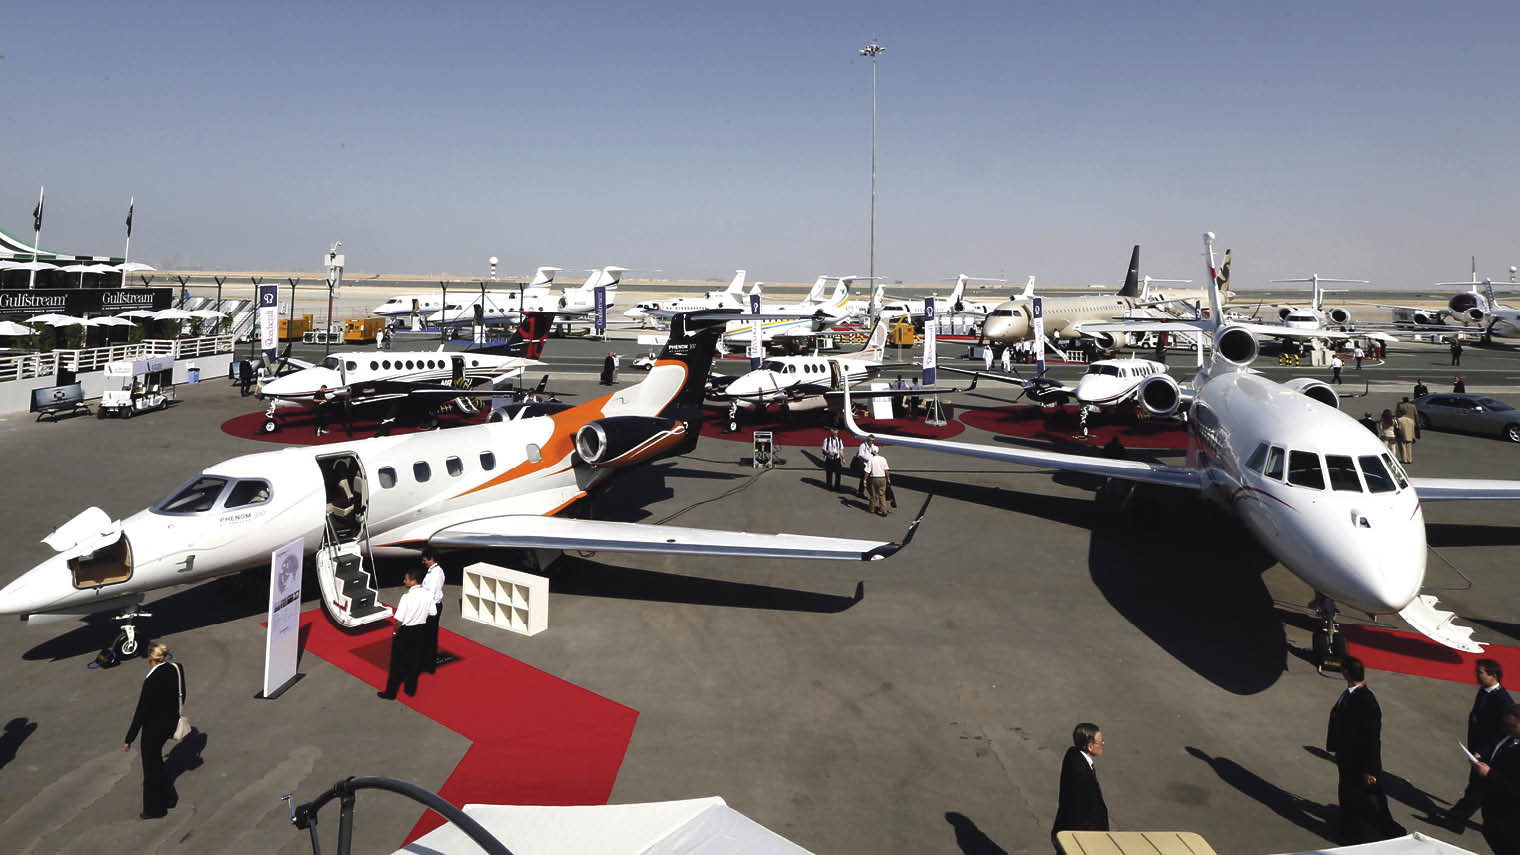 Visitors at the Middle East Business Aviation event at Dubai’s Al Maktoum Airport